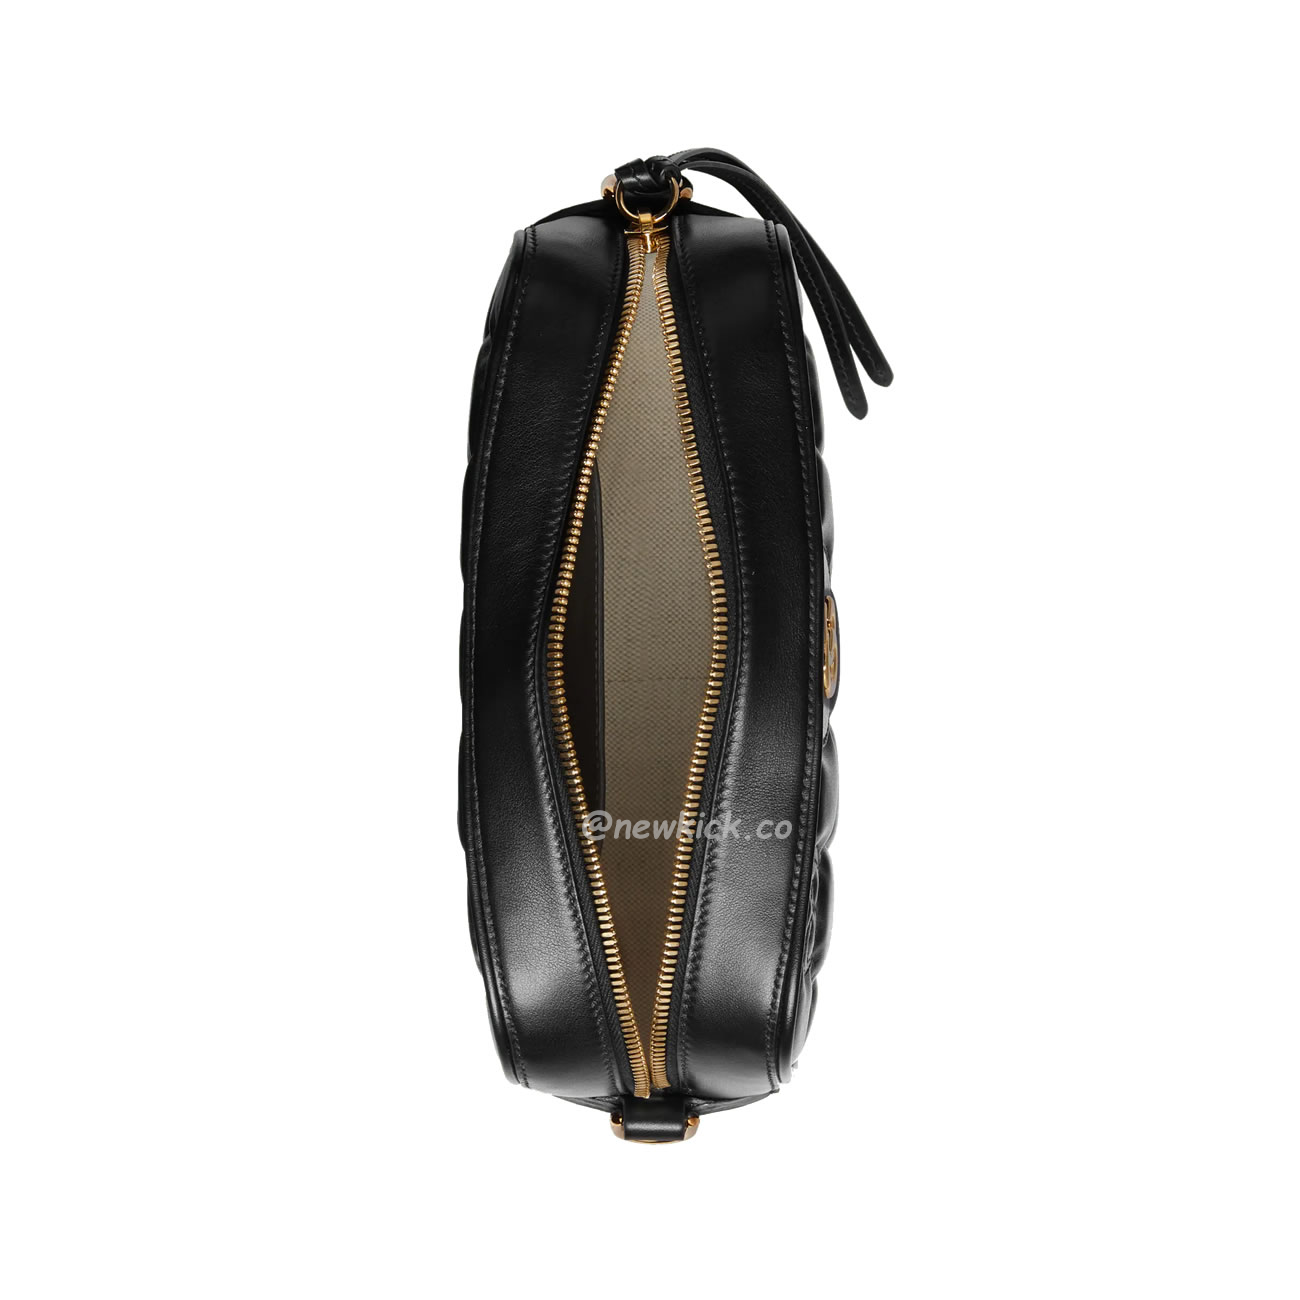 Gucci Gg Matelass Small Bag Product Details 702234 Um8hg 1046 (5) - newkick.org